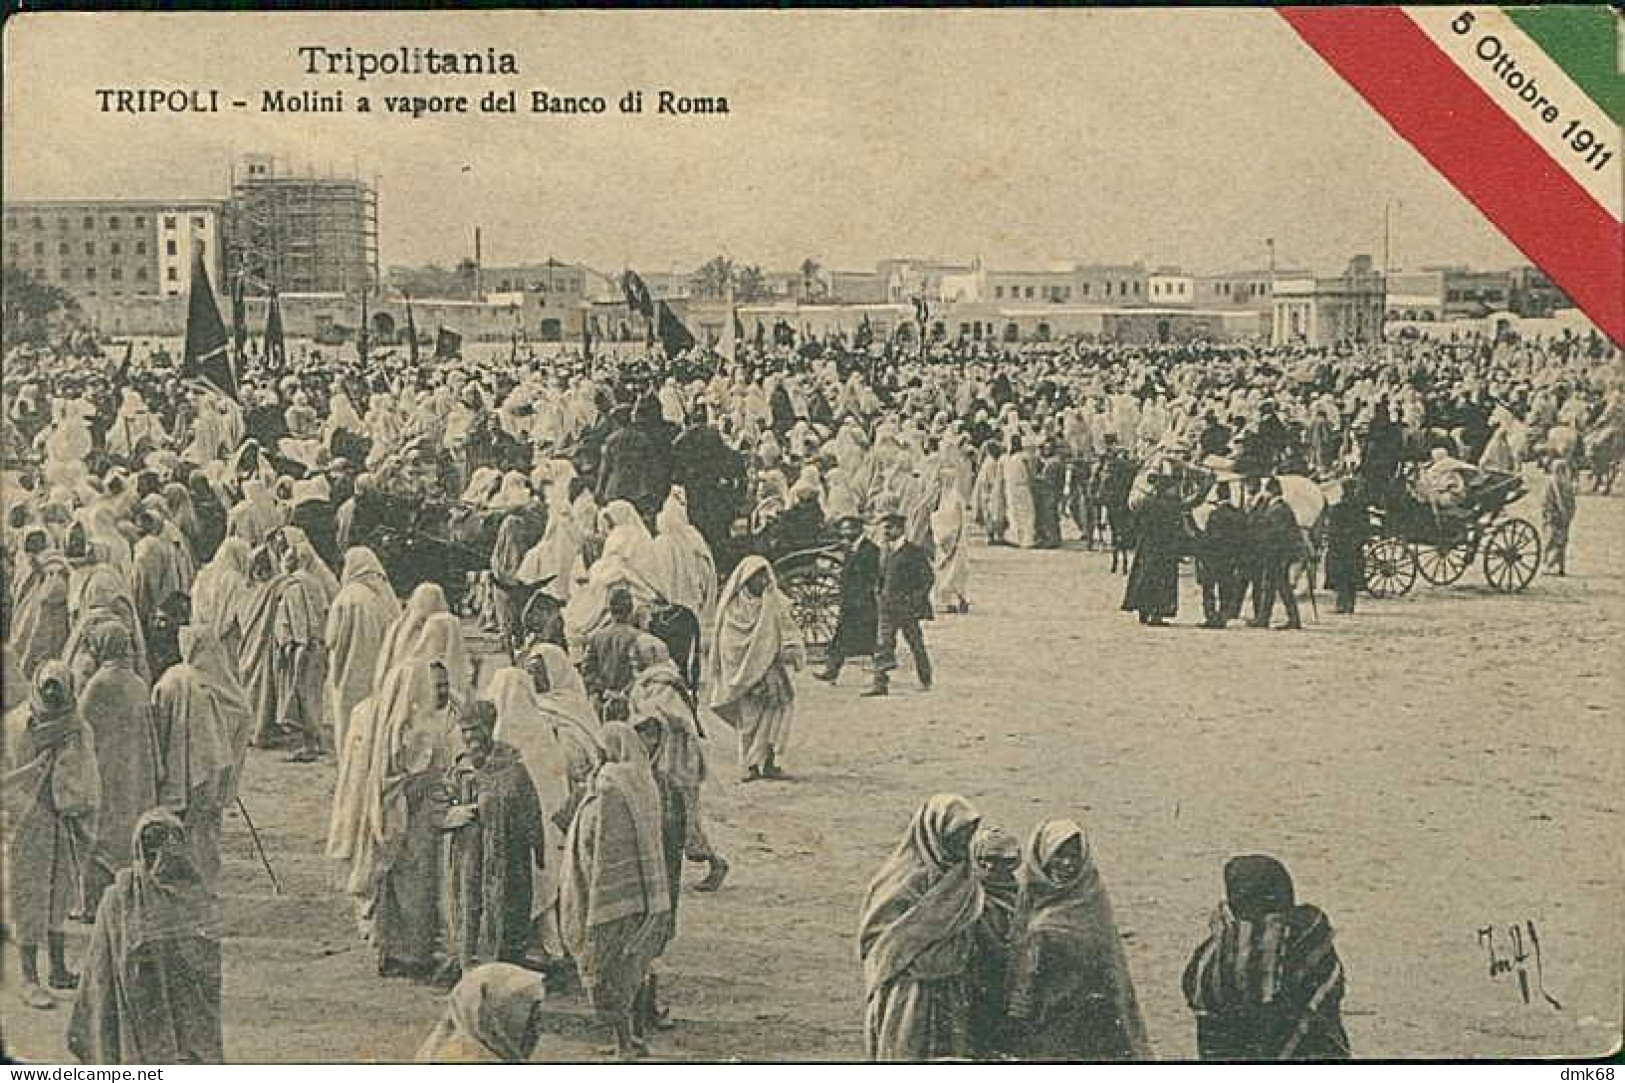 LIBYA / LIBIA - TRIPOLI - MOLINI A VAPORE DEL BANCO DI ROMA - EDIZ. FUMAGALLI - 5 OTT. 1911 (12487/2) - Libia